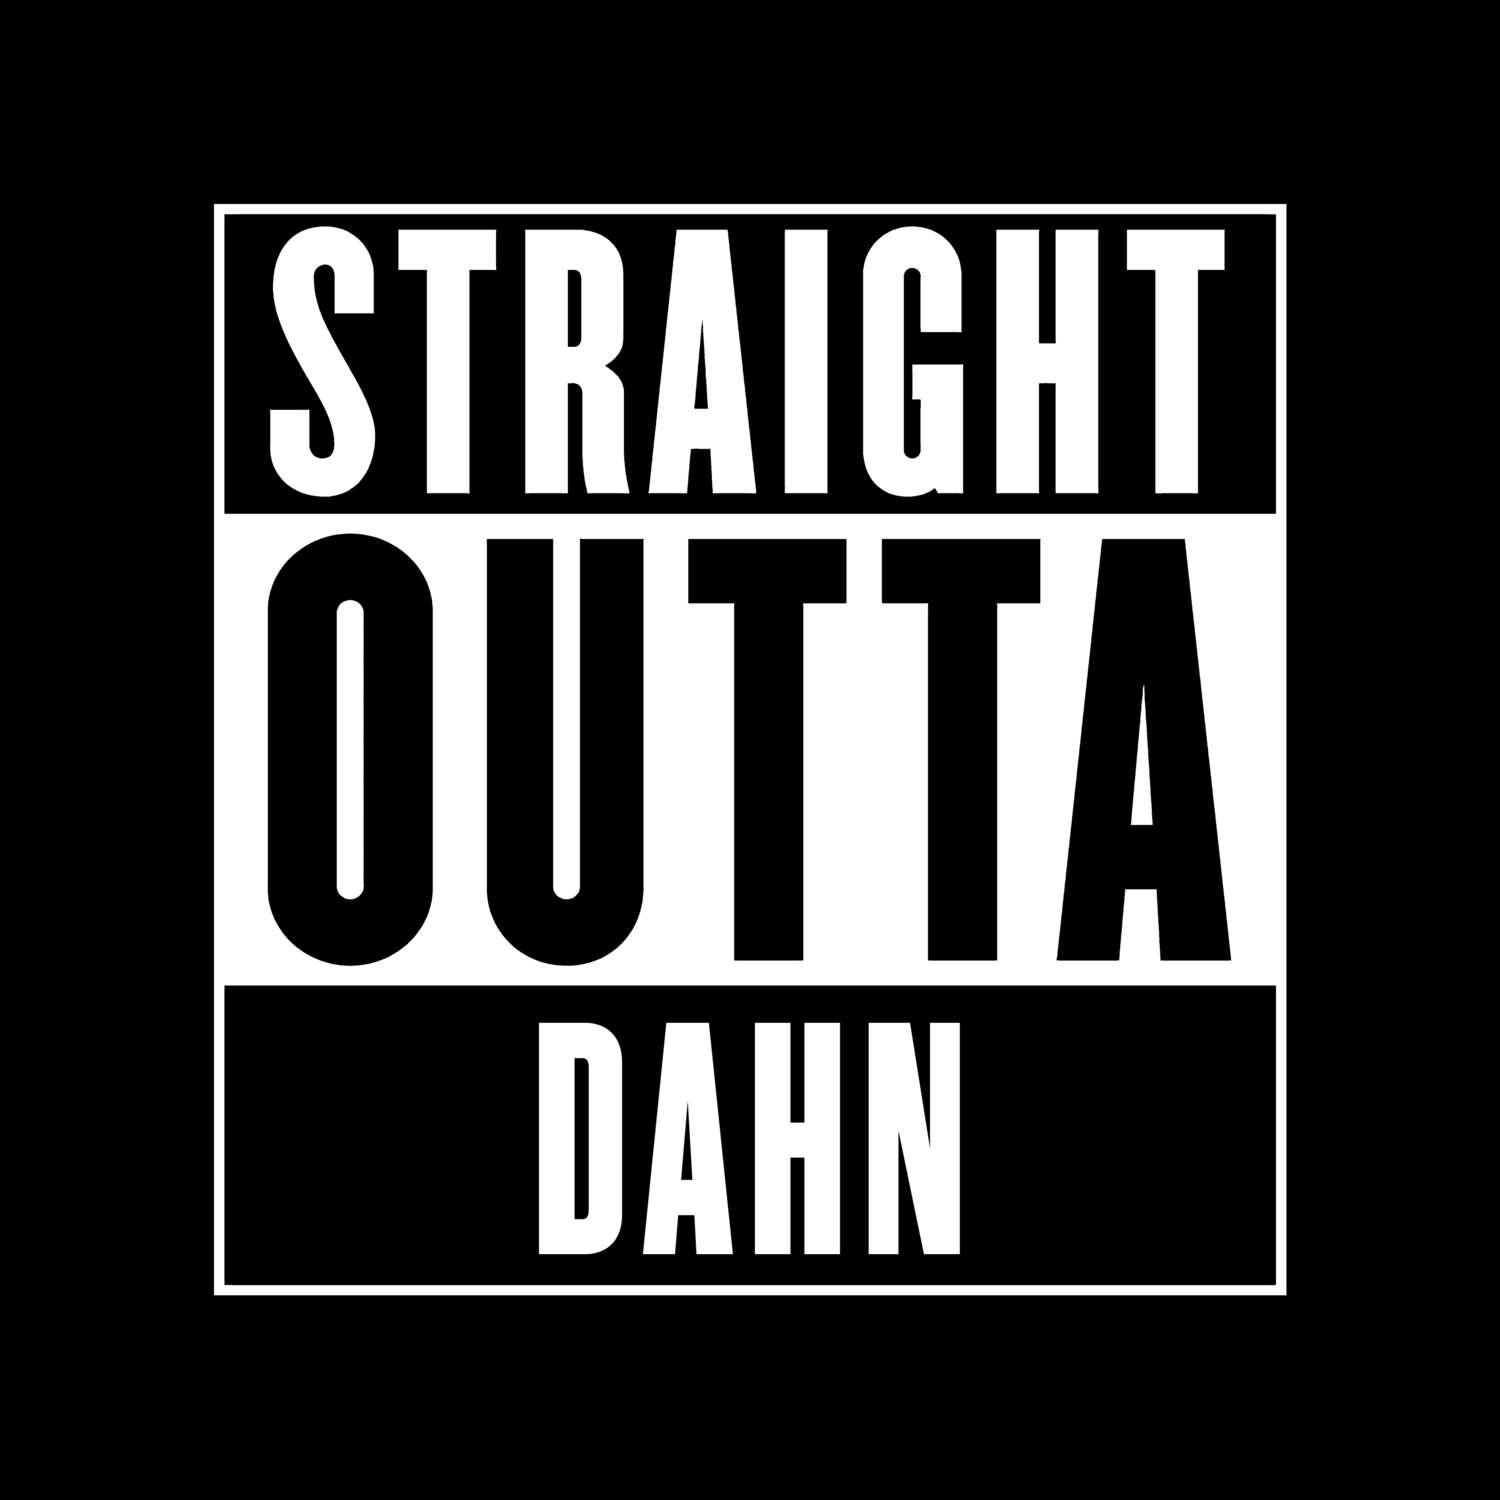 Dahn T-Shirt »Straight Outta«